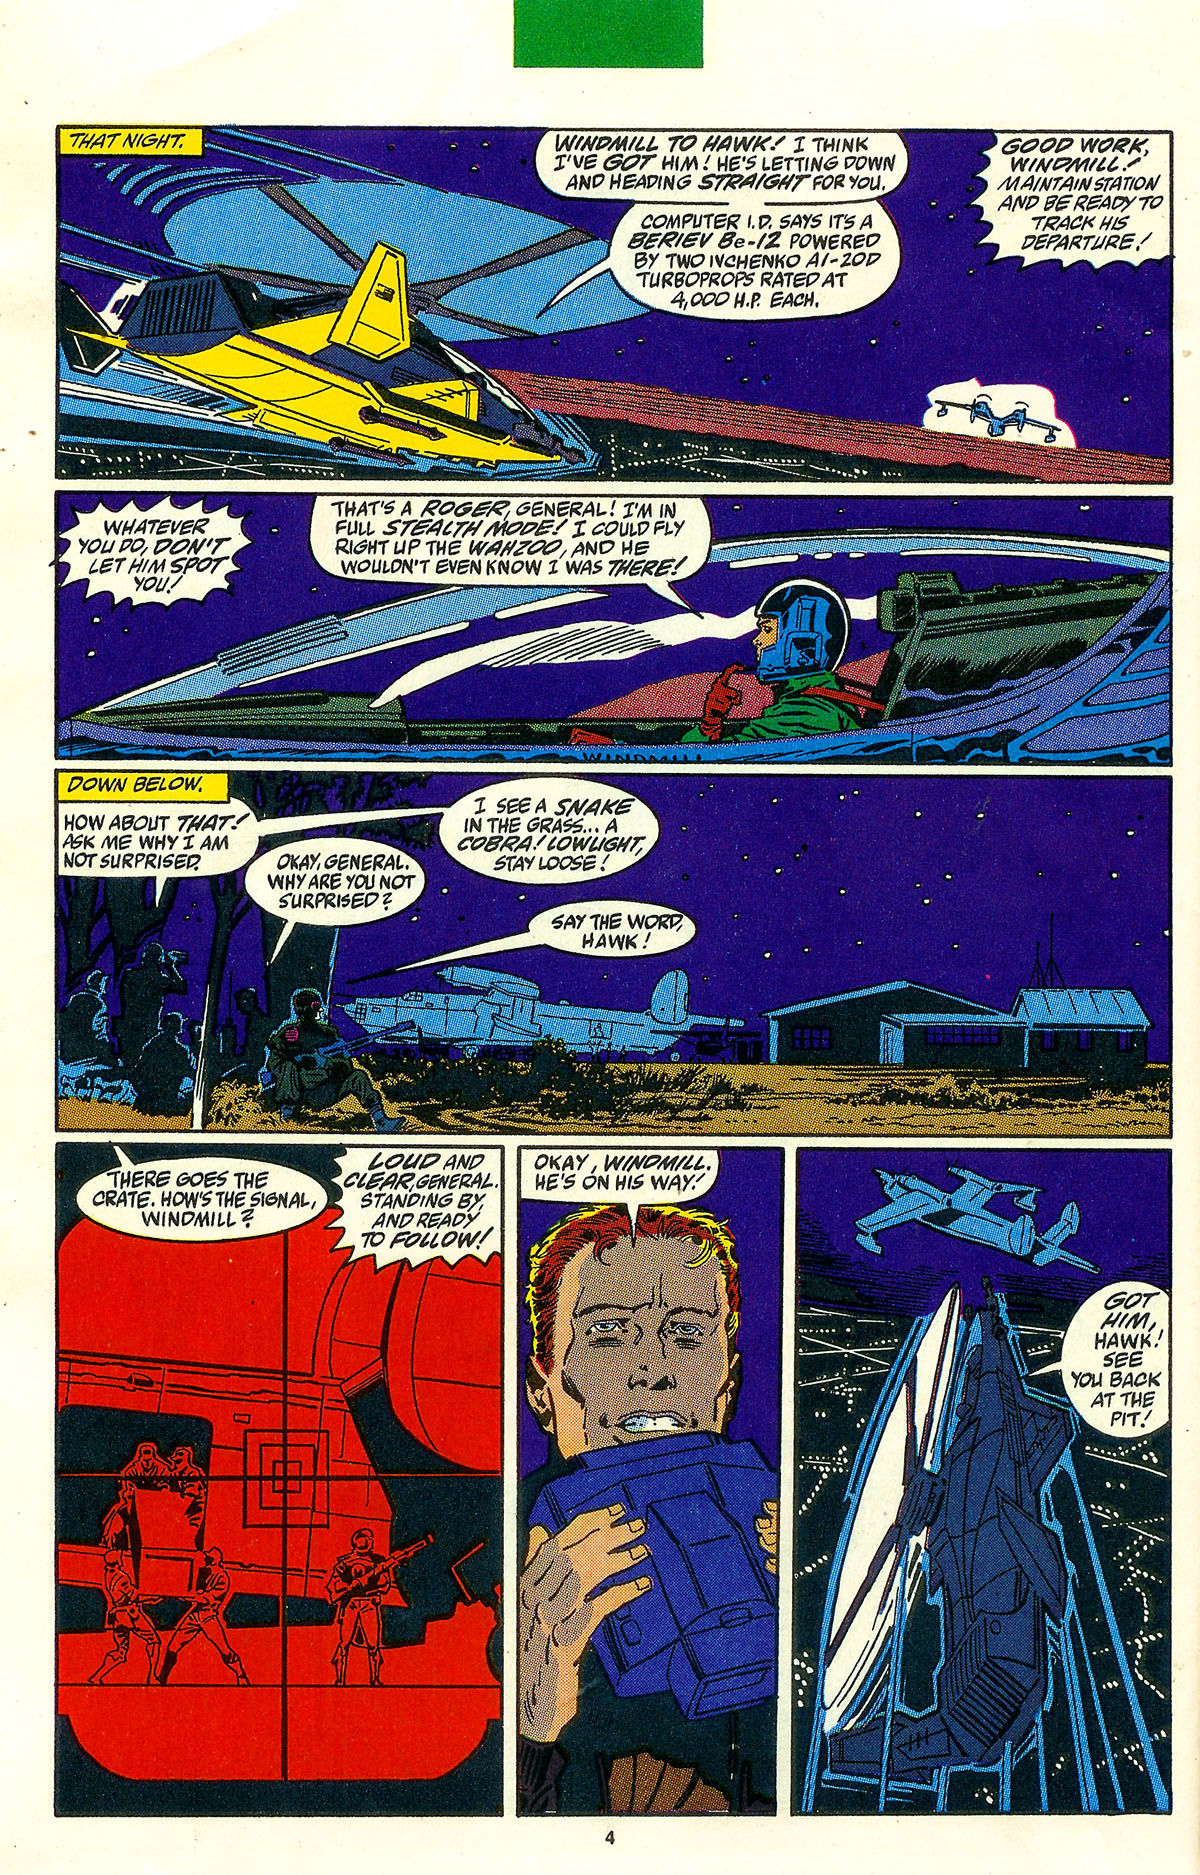 G.I. Joe: A Real American Hero 119 Page 4